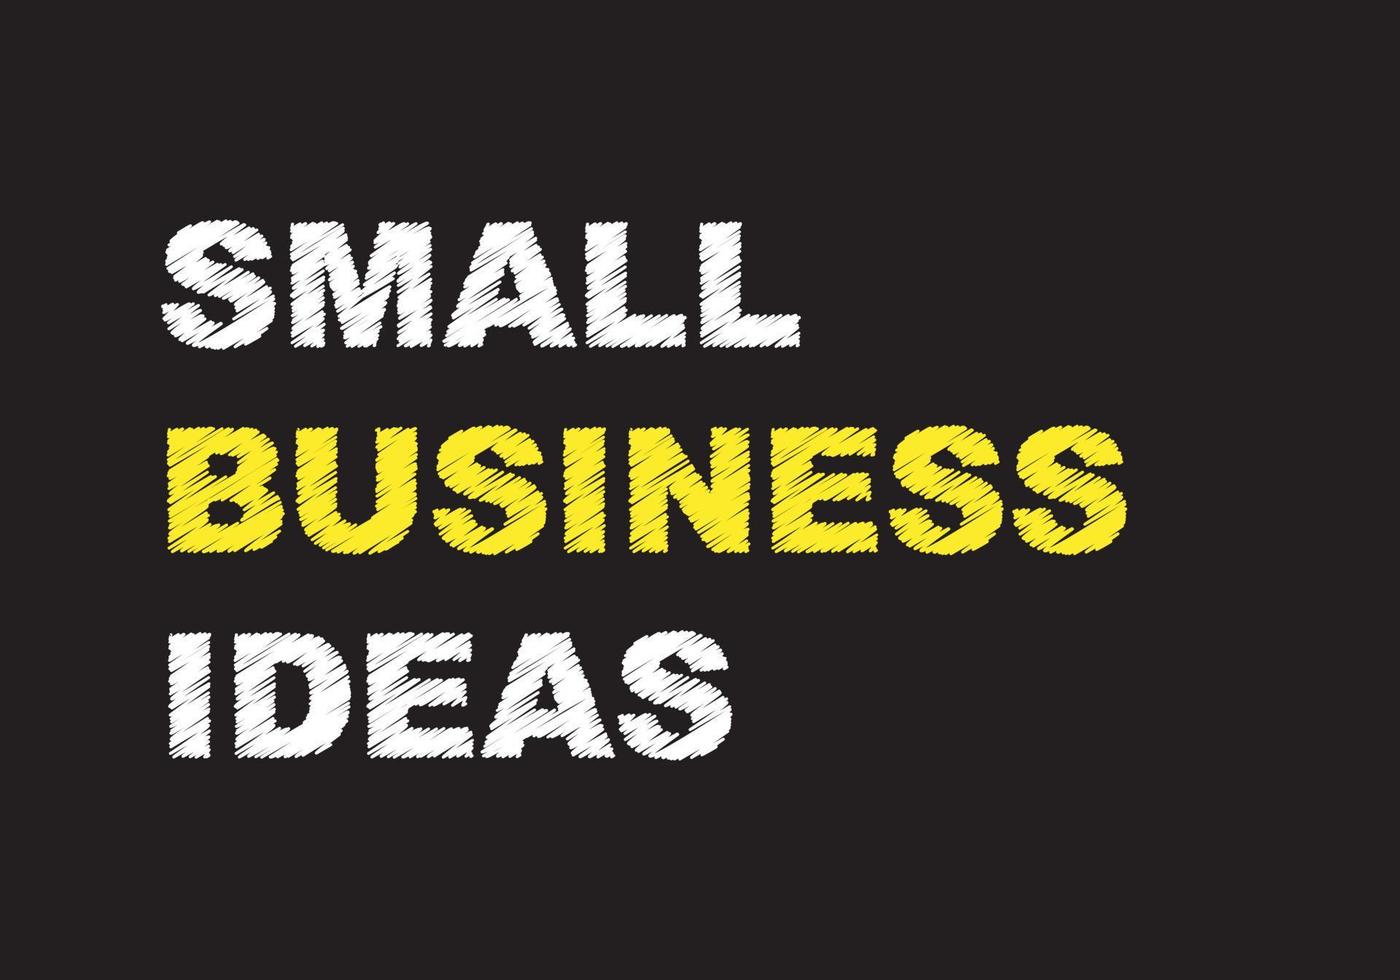 Small business ideas written on chalkboard. Business concept vector